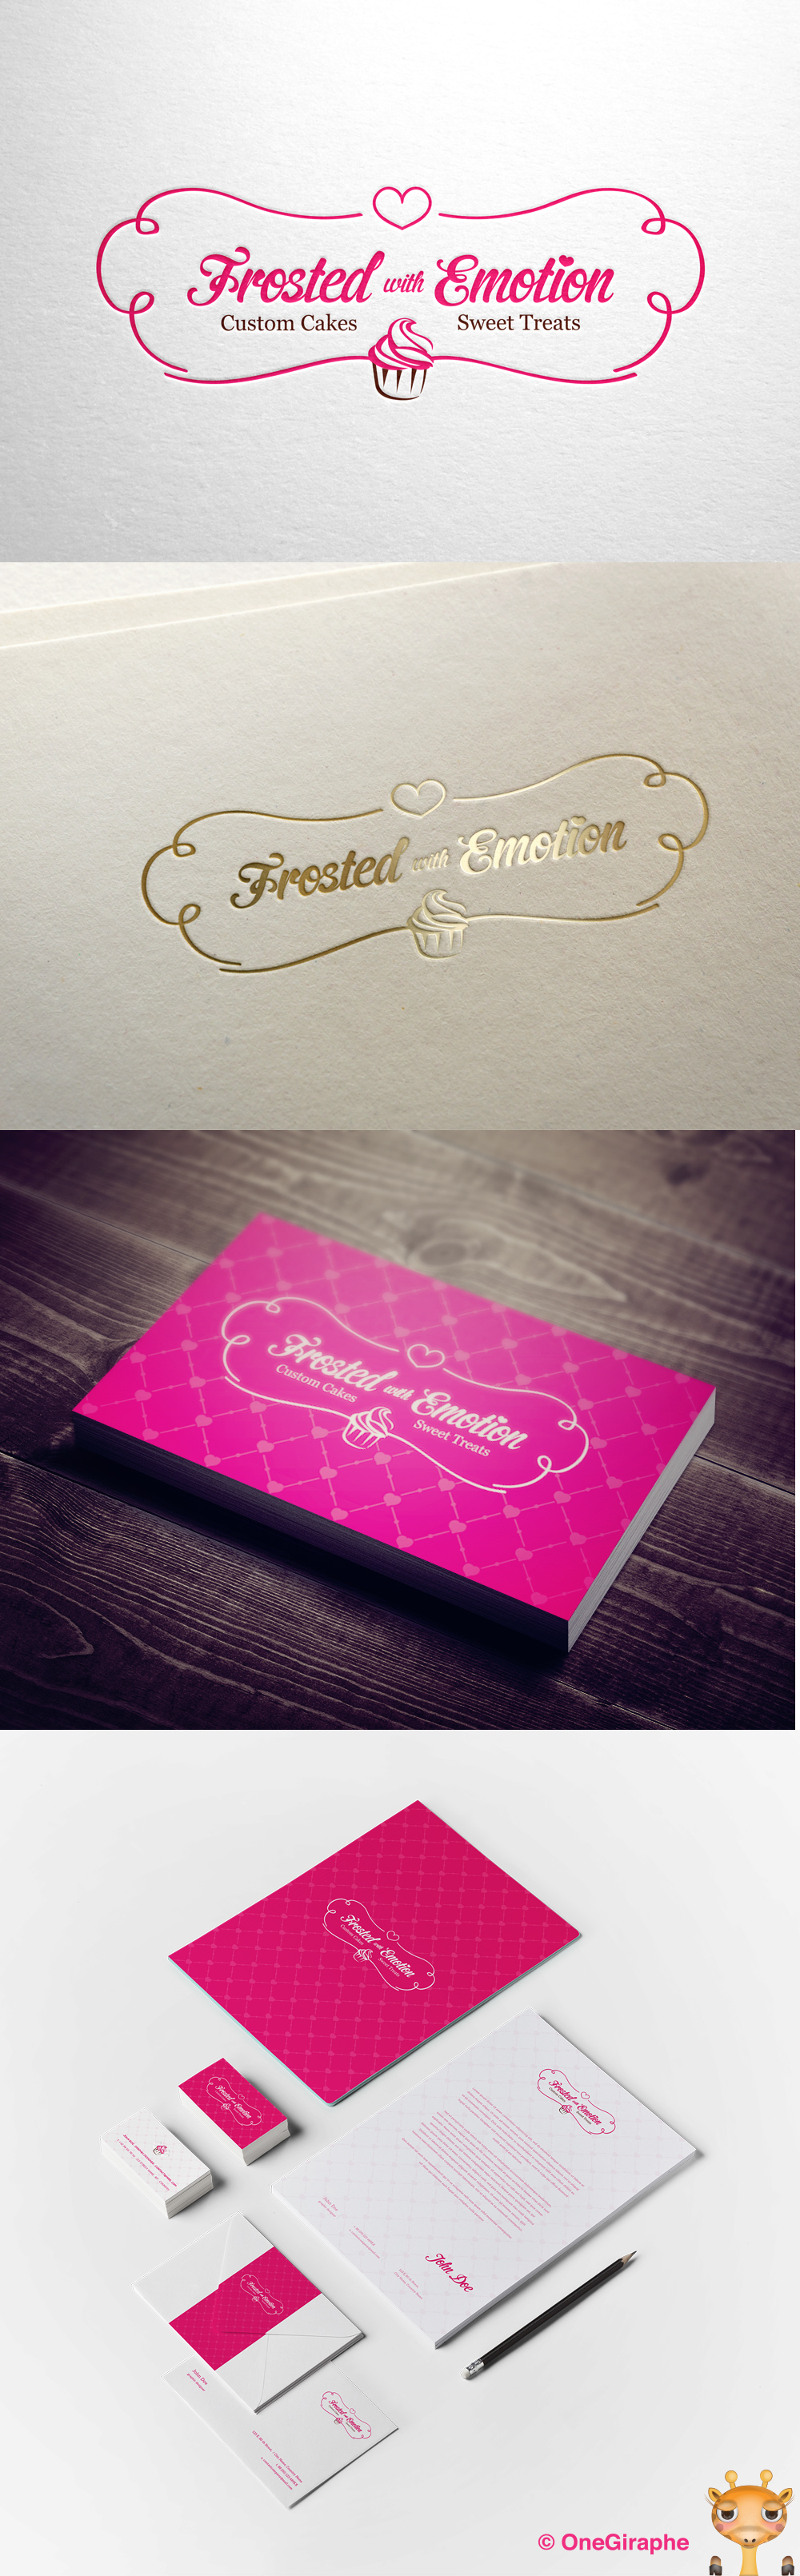 cake cupcake bake bakery sweet cute logo pink design graphic brand identity shop woman girly